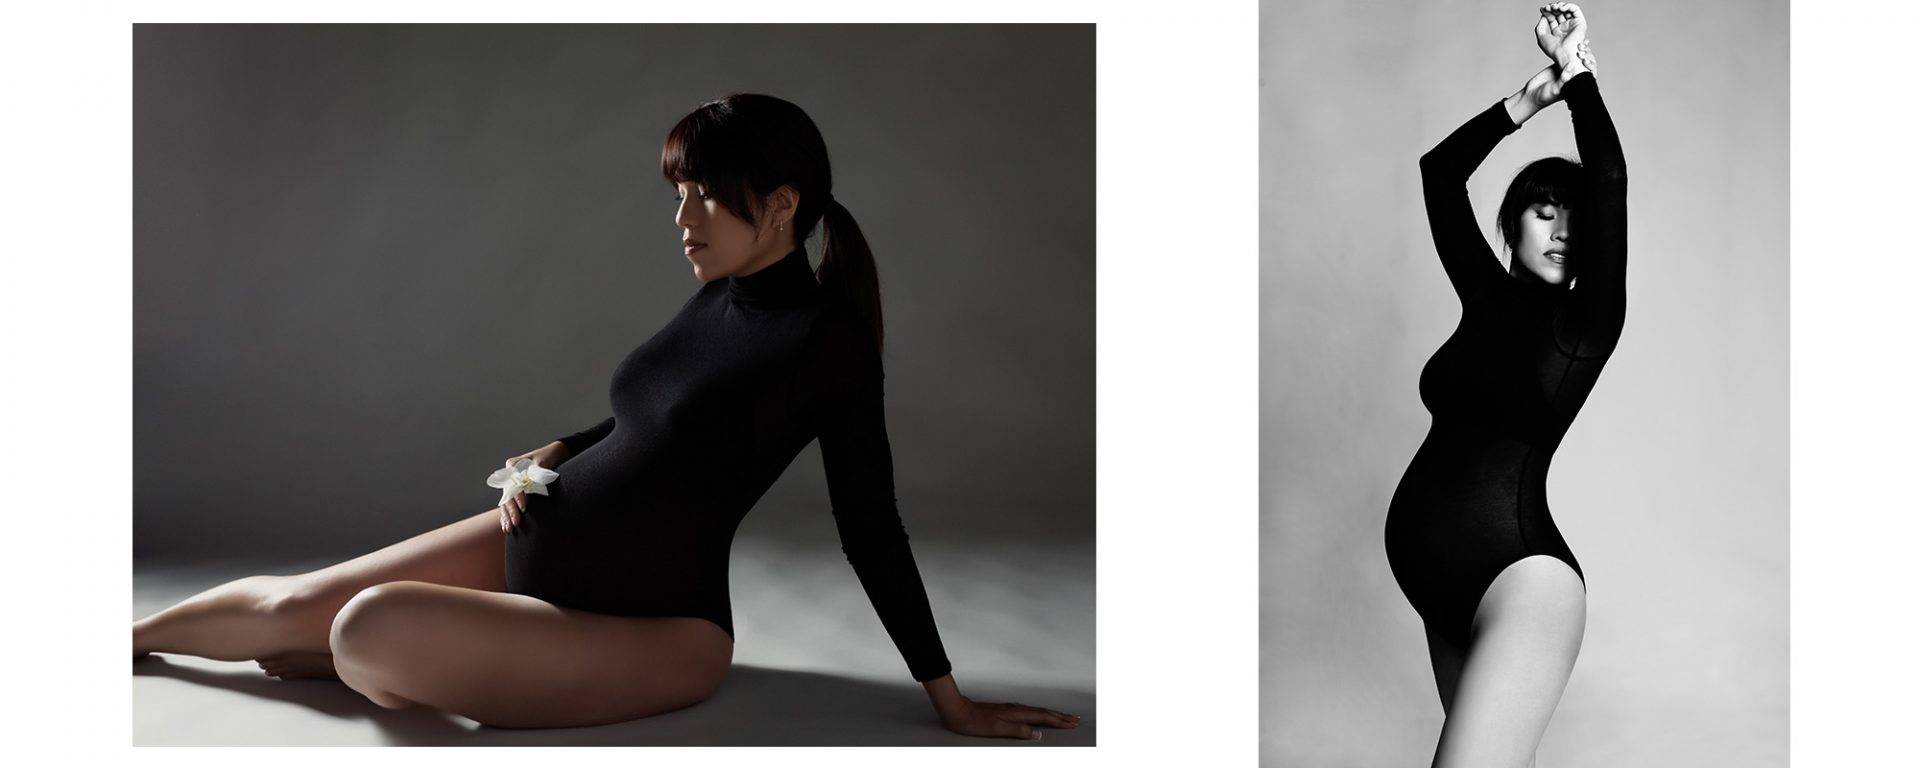 Pregnancy photos taken in a professional studio.